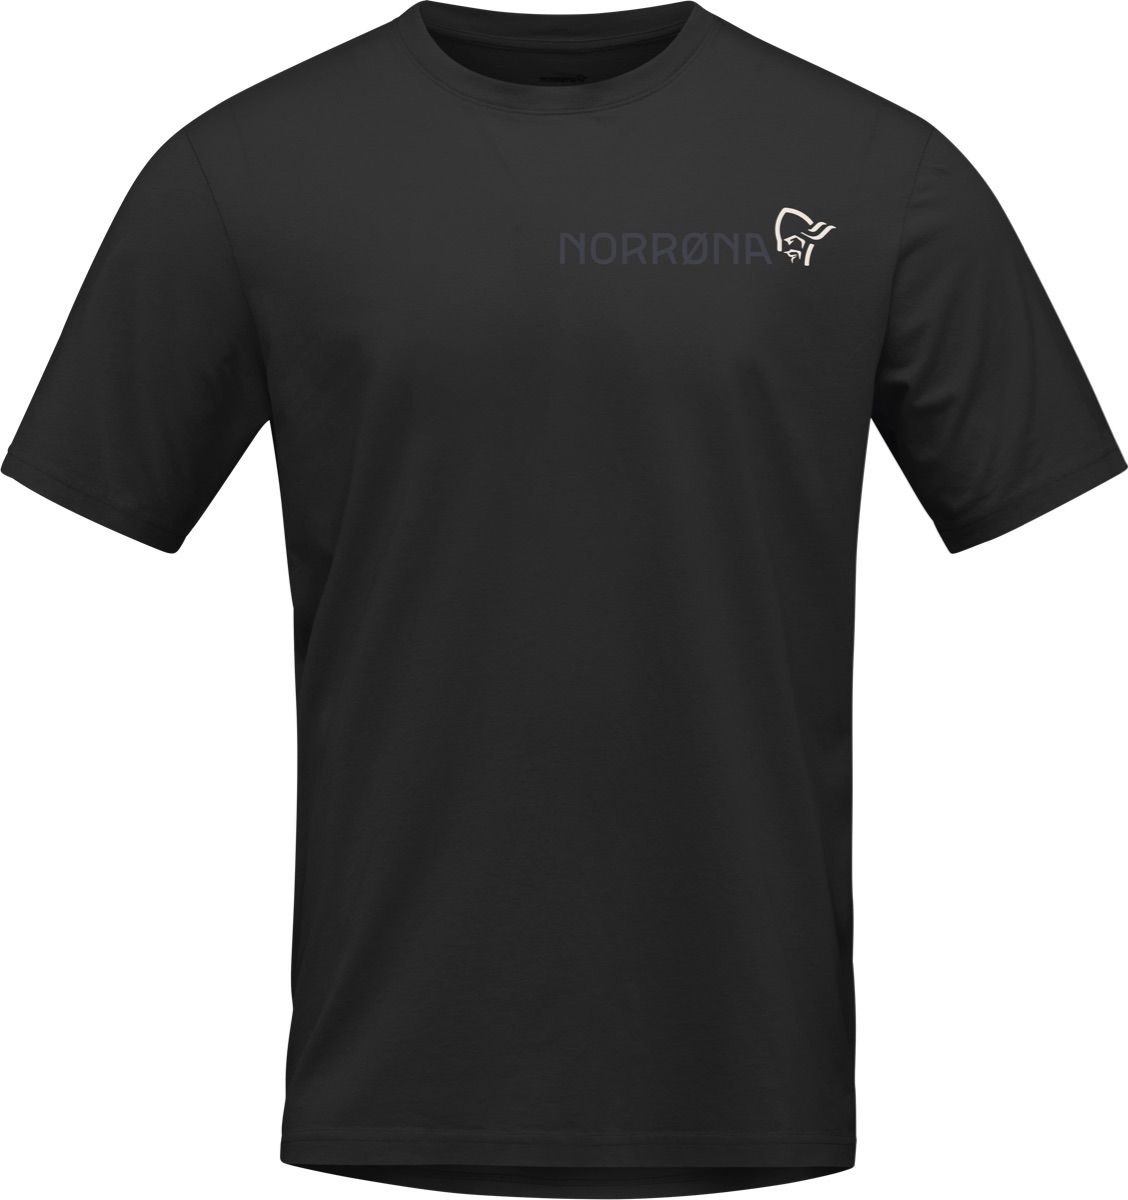 Norrøna Men's /29 Cotton Duotone T-Shirt Caviar